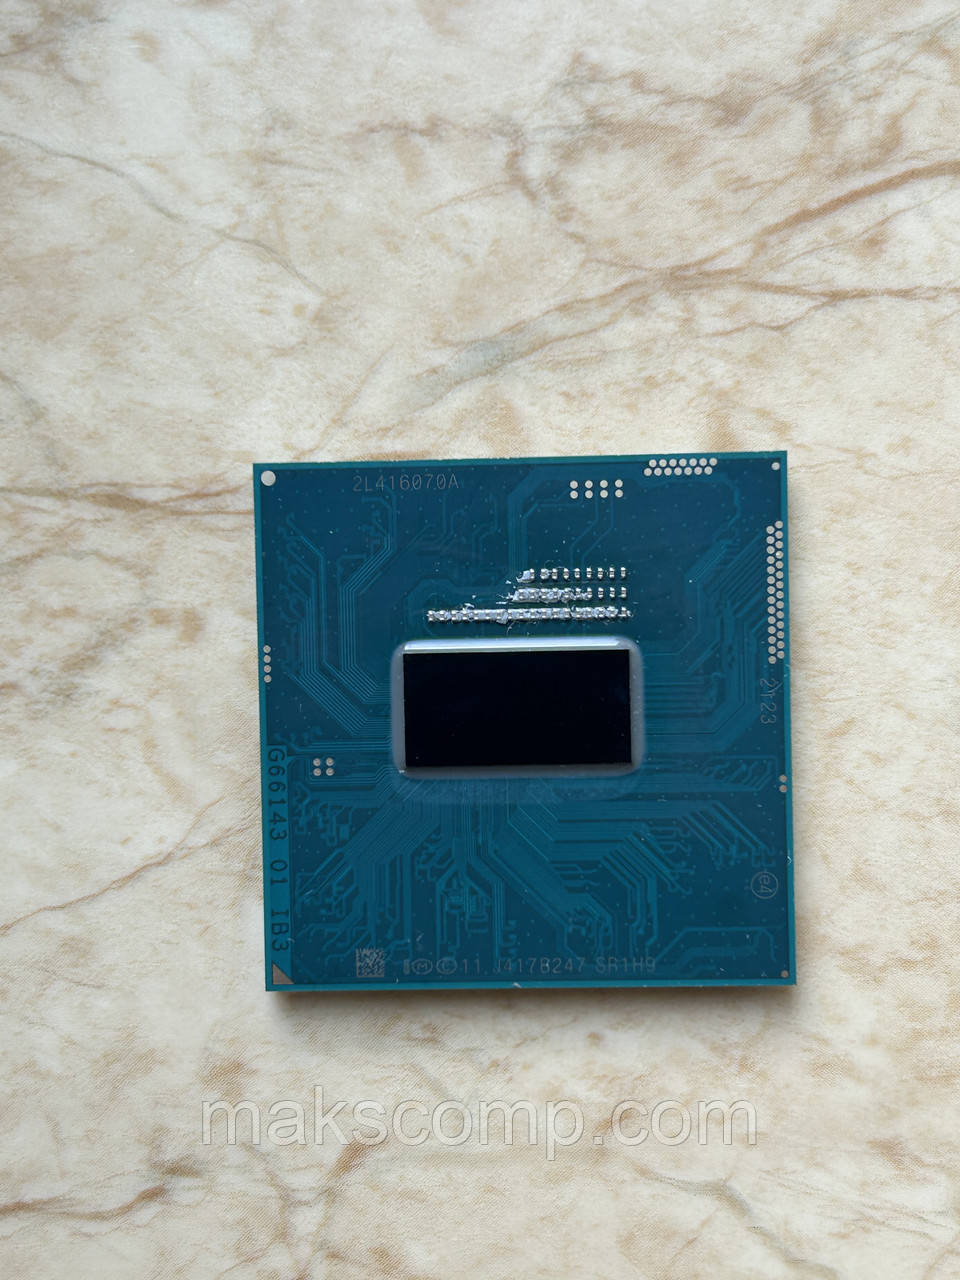 Процесор Intel Core i5-4300M 3M 3,3GHz sr1h9 Haswell Socket G3 / rPGA946B, rPGA947